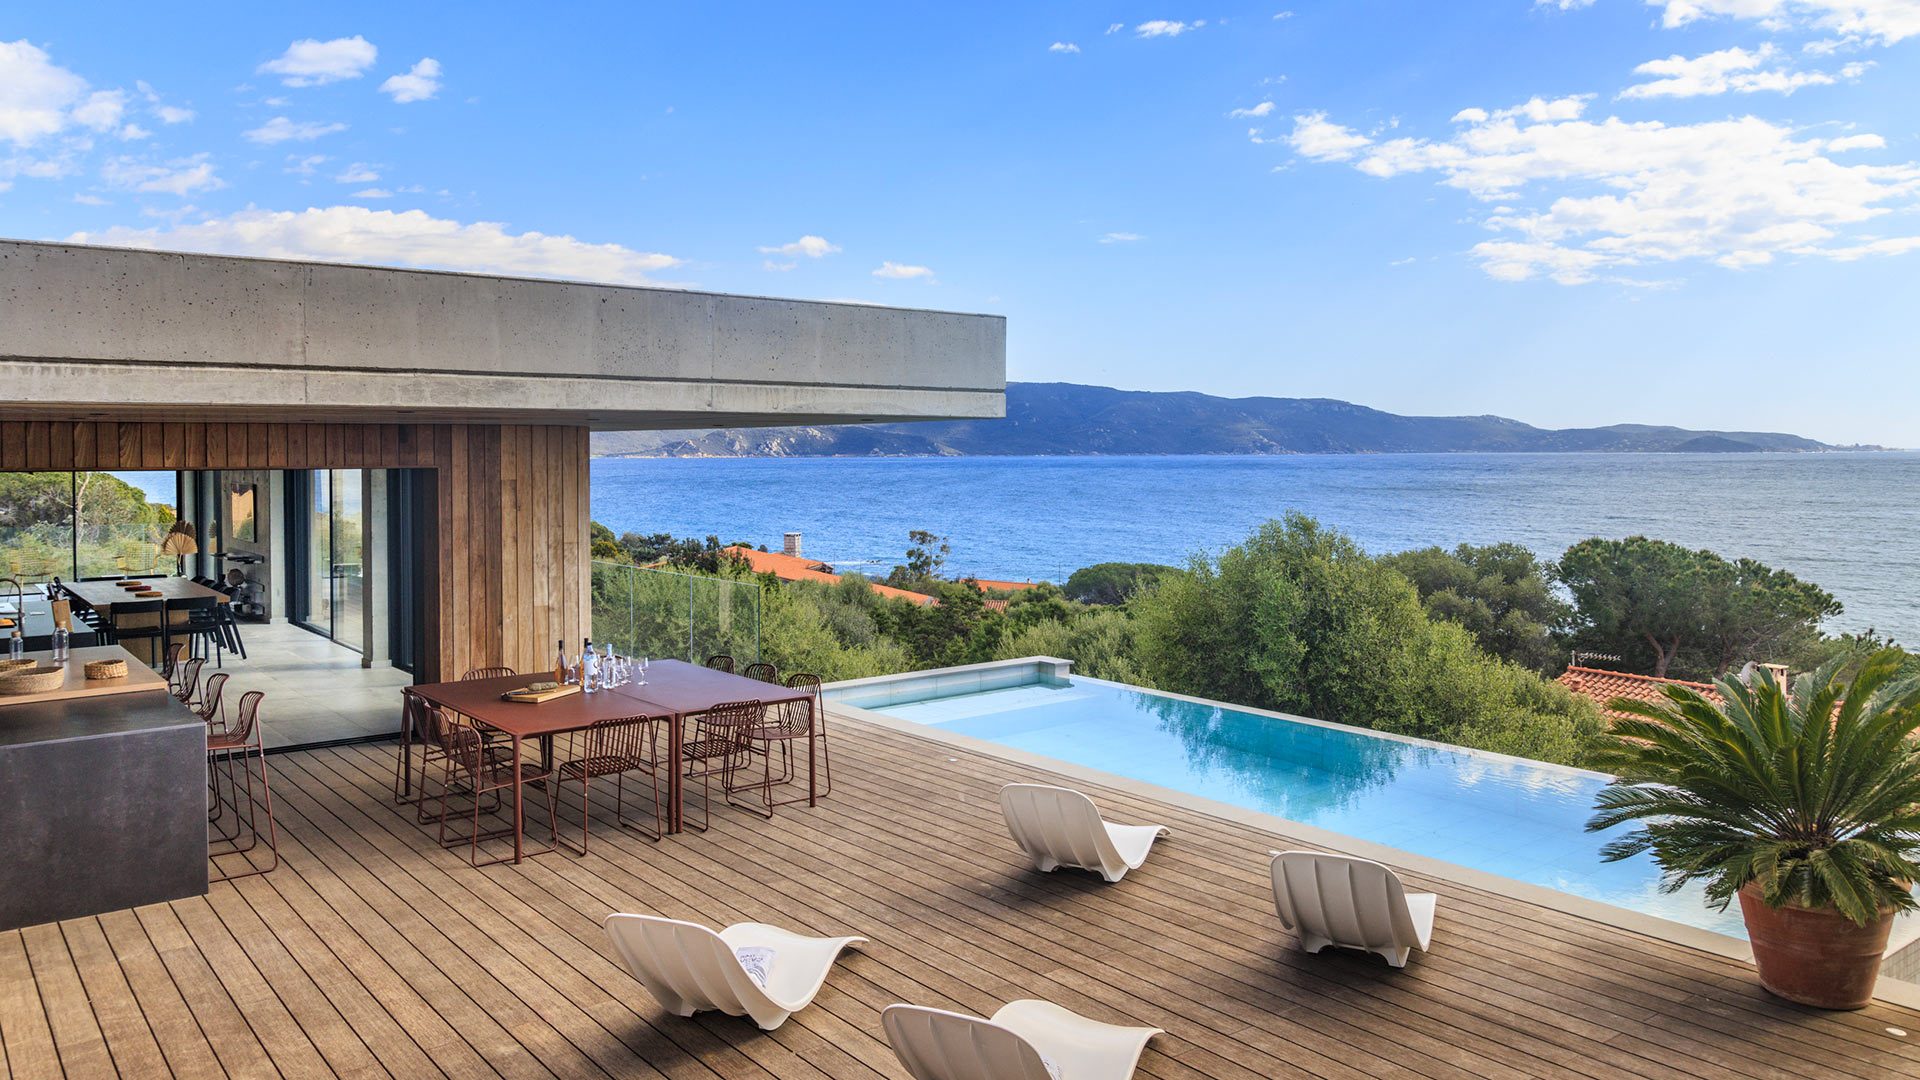 La piscine de la villa Oléine en Corse du Sud